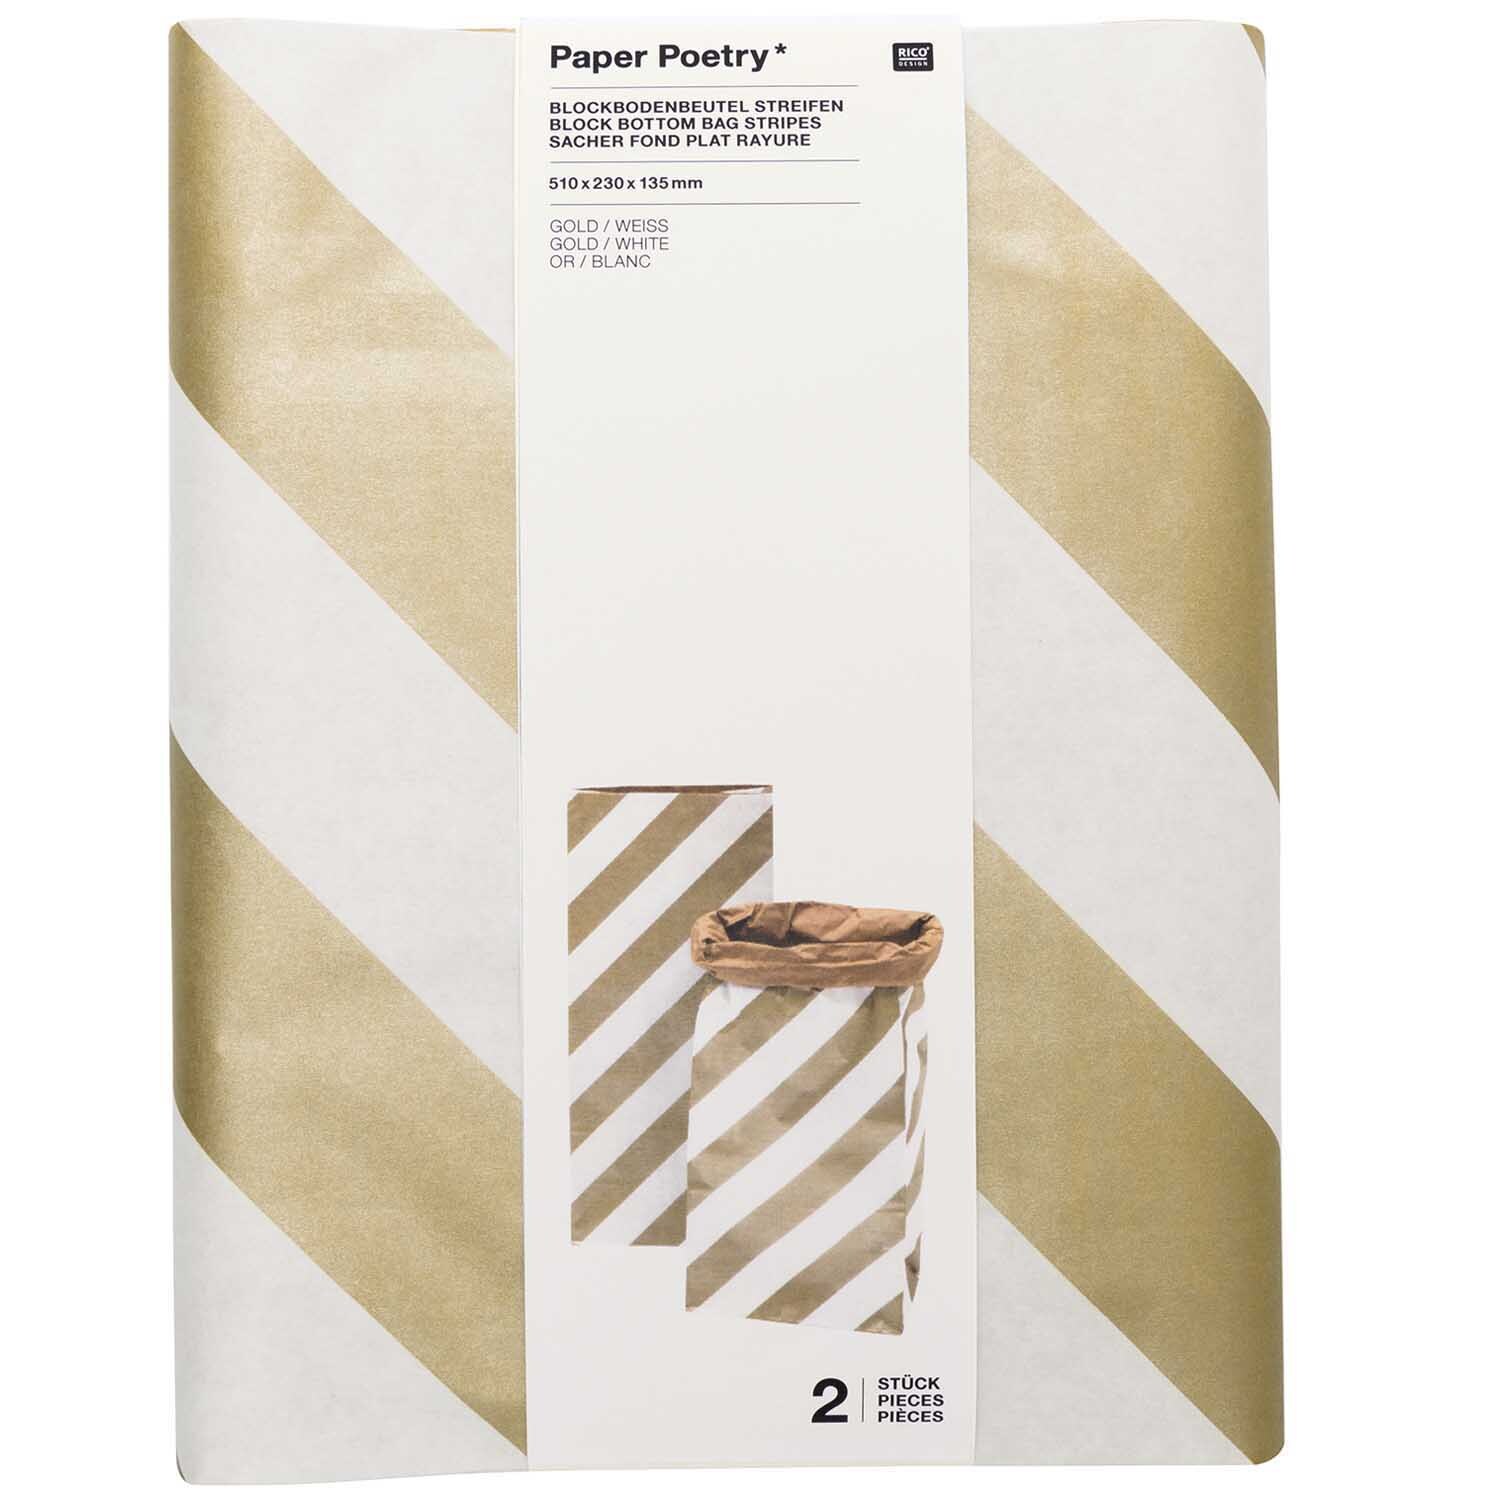 Paper Poetry Maxi-Blockbodenbeutel M Streifen 51x23x13,5cm 2 Stück